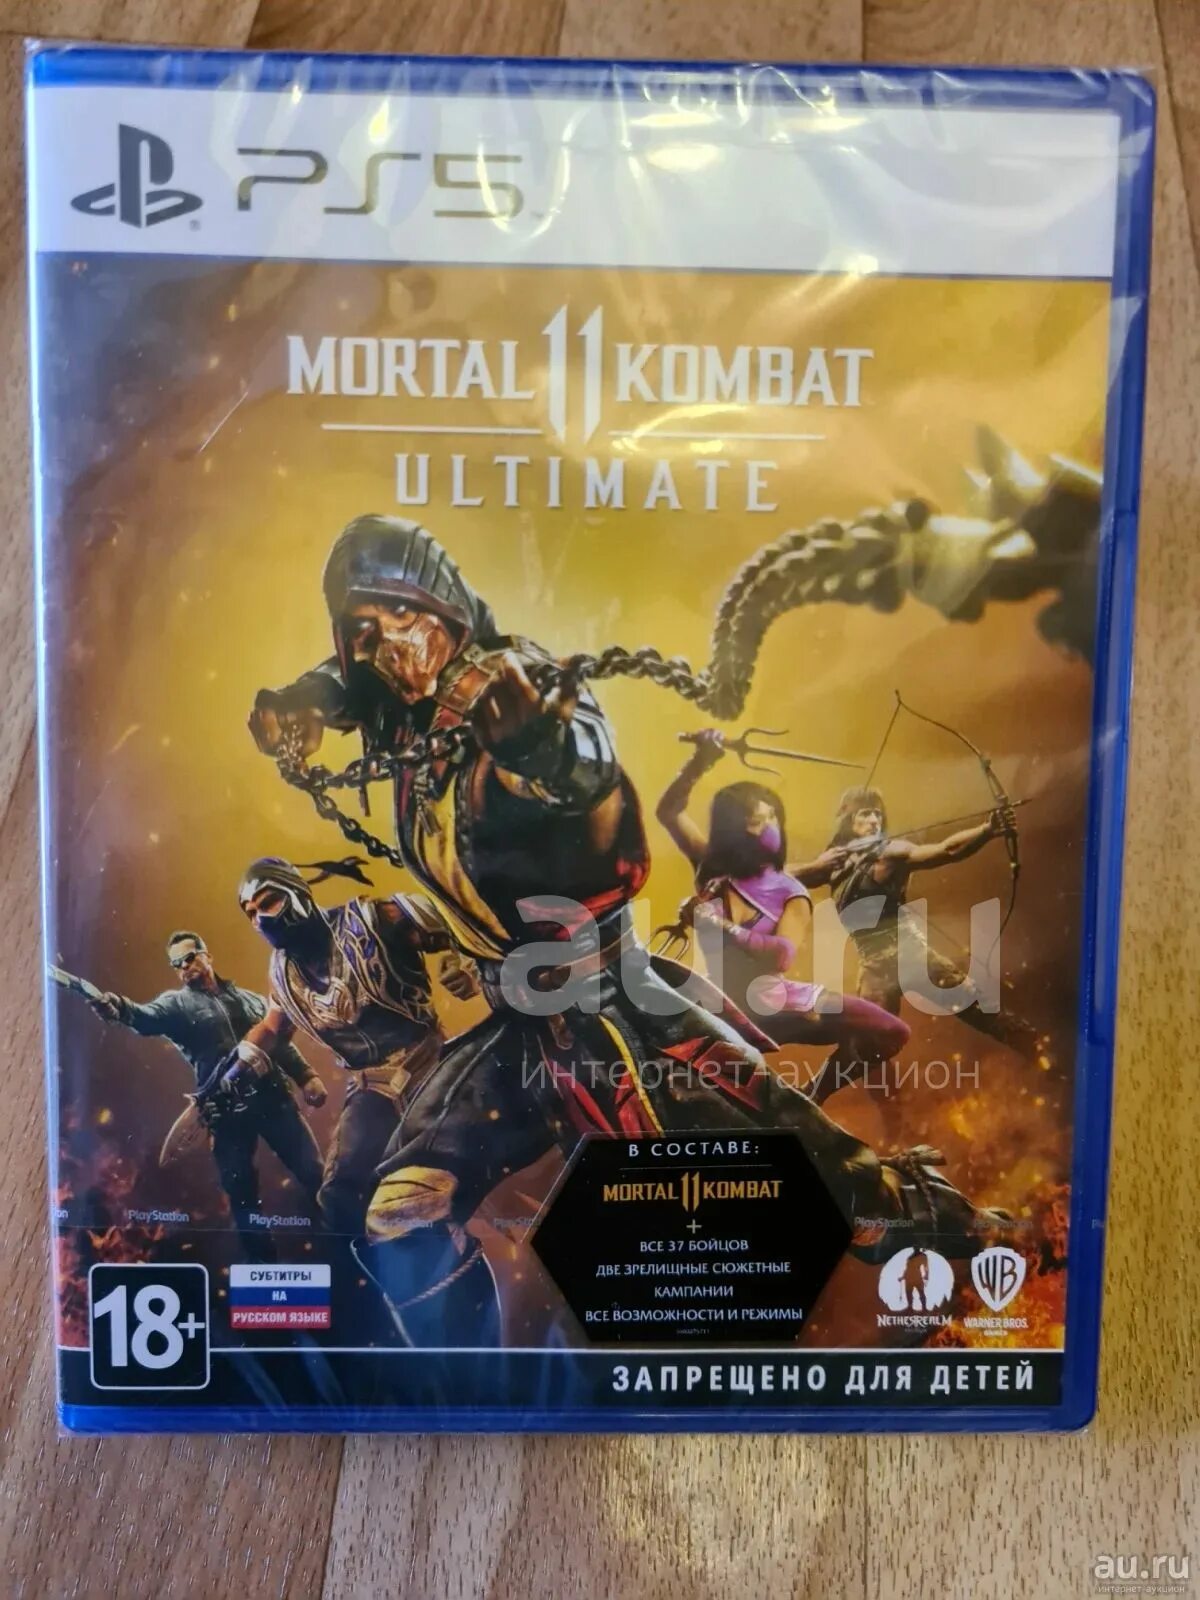 Ps5 mortal kombat купить. Mortal Kombat 11 Ultimate пс4 диск. Mortal Kombat 11 Ultimate ps4. Mortal Kombat 11 диск. Mortal Kombat 11 Ultimate ps4 диск.